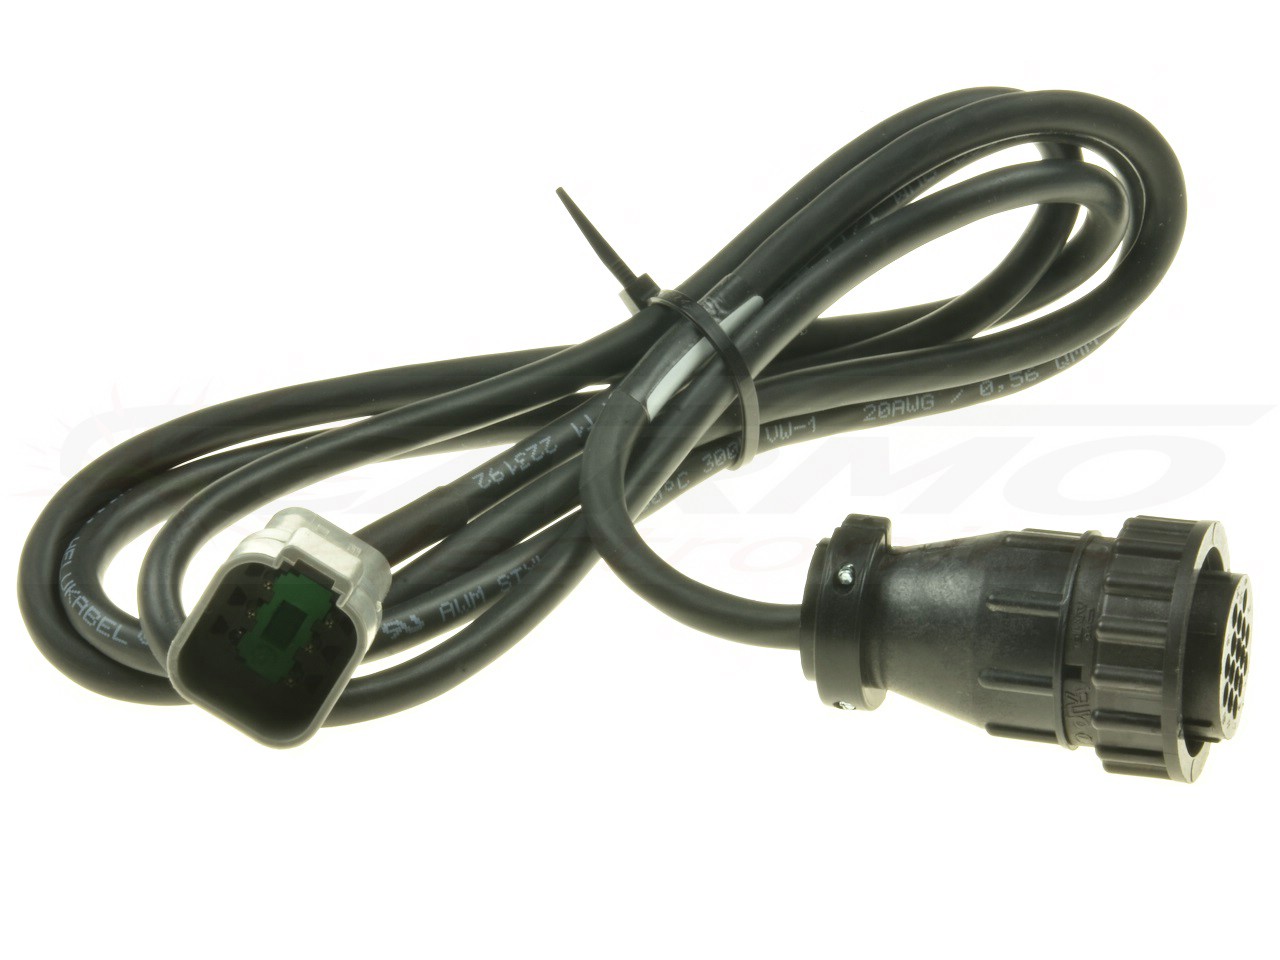 3151/AM47 BRP group Diagnostic cable for use with CAN-AM, SEA-DOO, SKI-DOO, LYNX and ROTAX diagnosis TEXA-3913320 - Clique na Imagem para Fechar